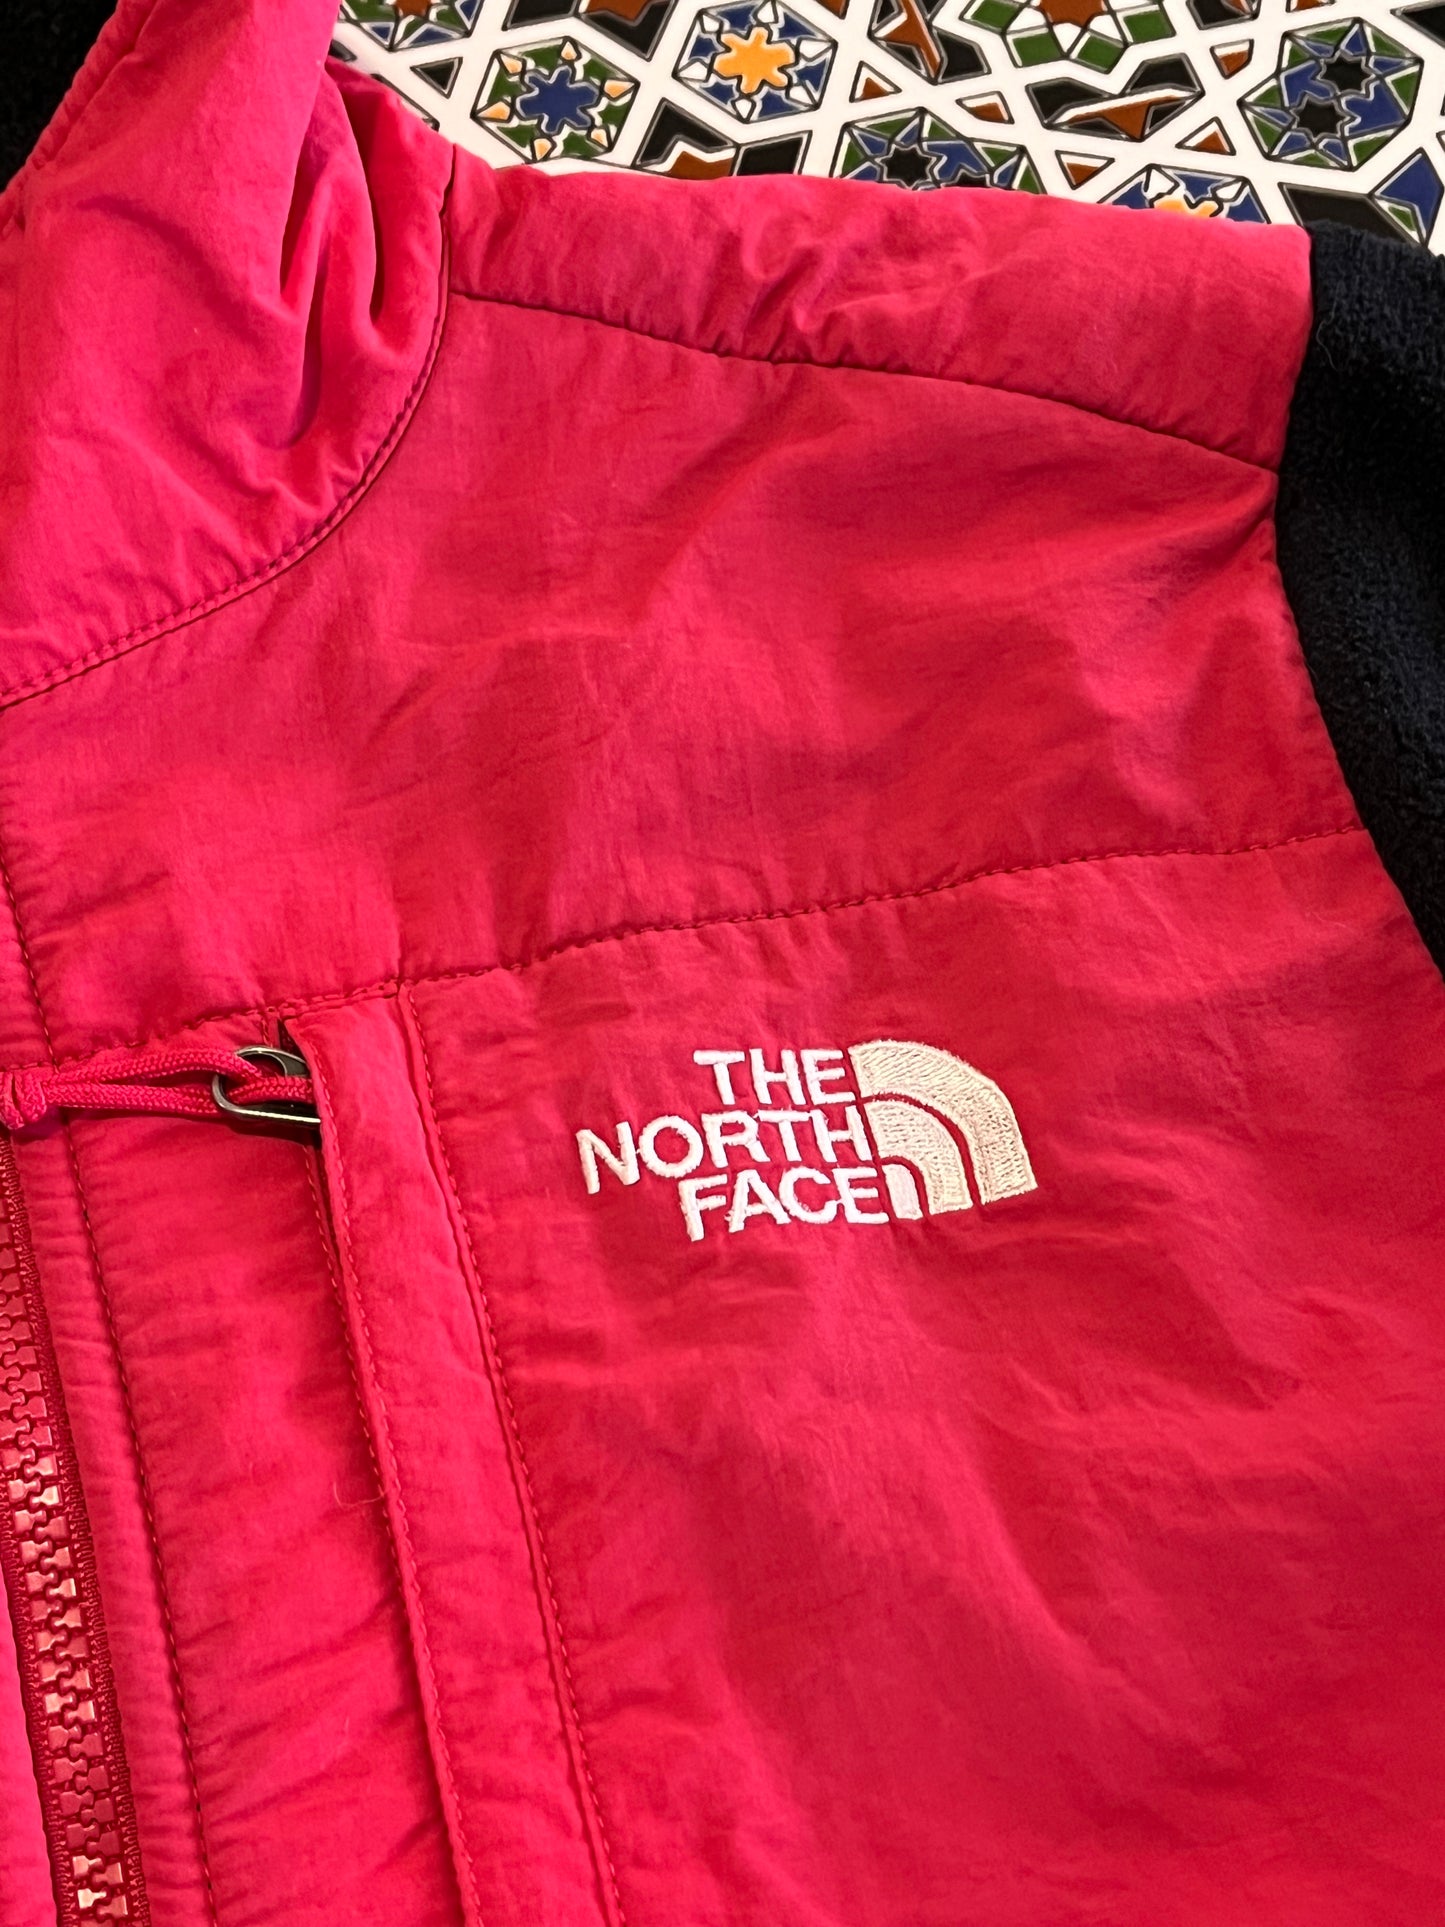 S women’s The North Face fleece jacket